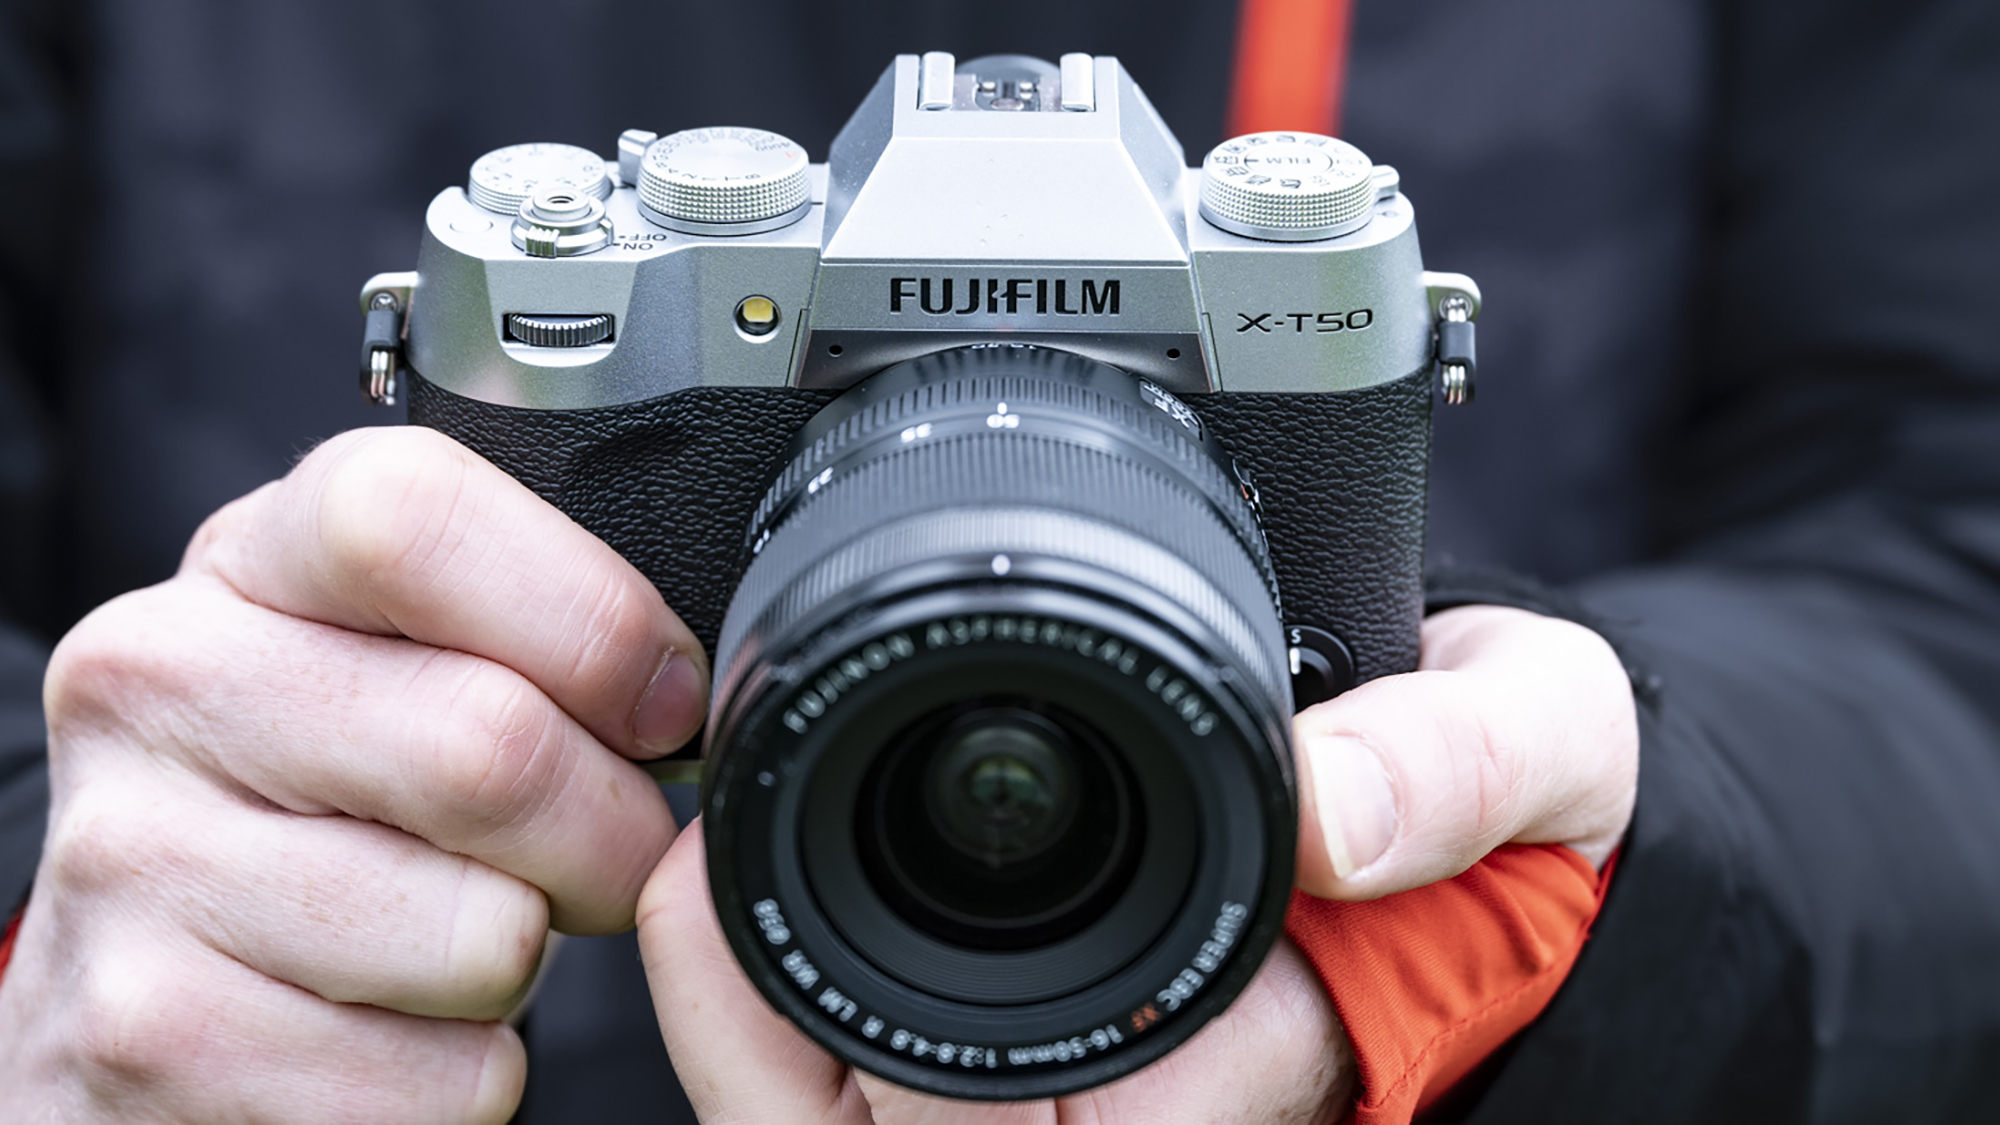 Fujifilm X-T50 in hand